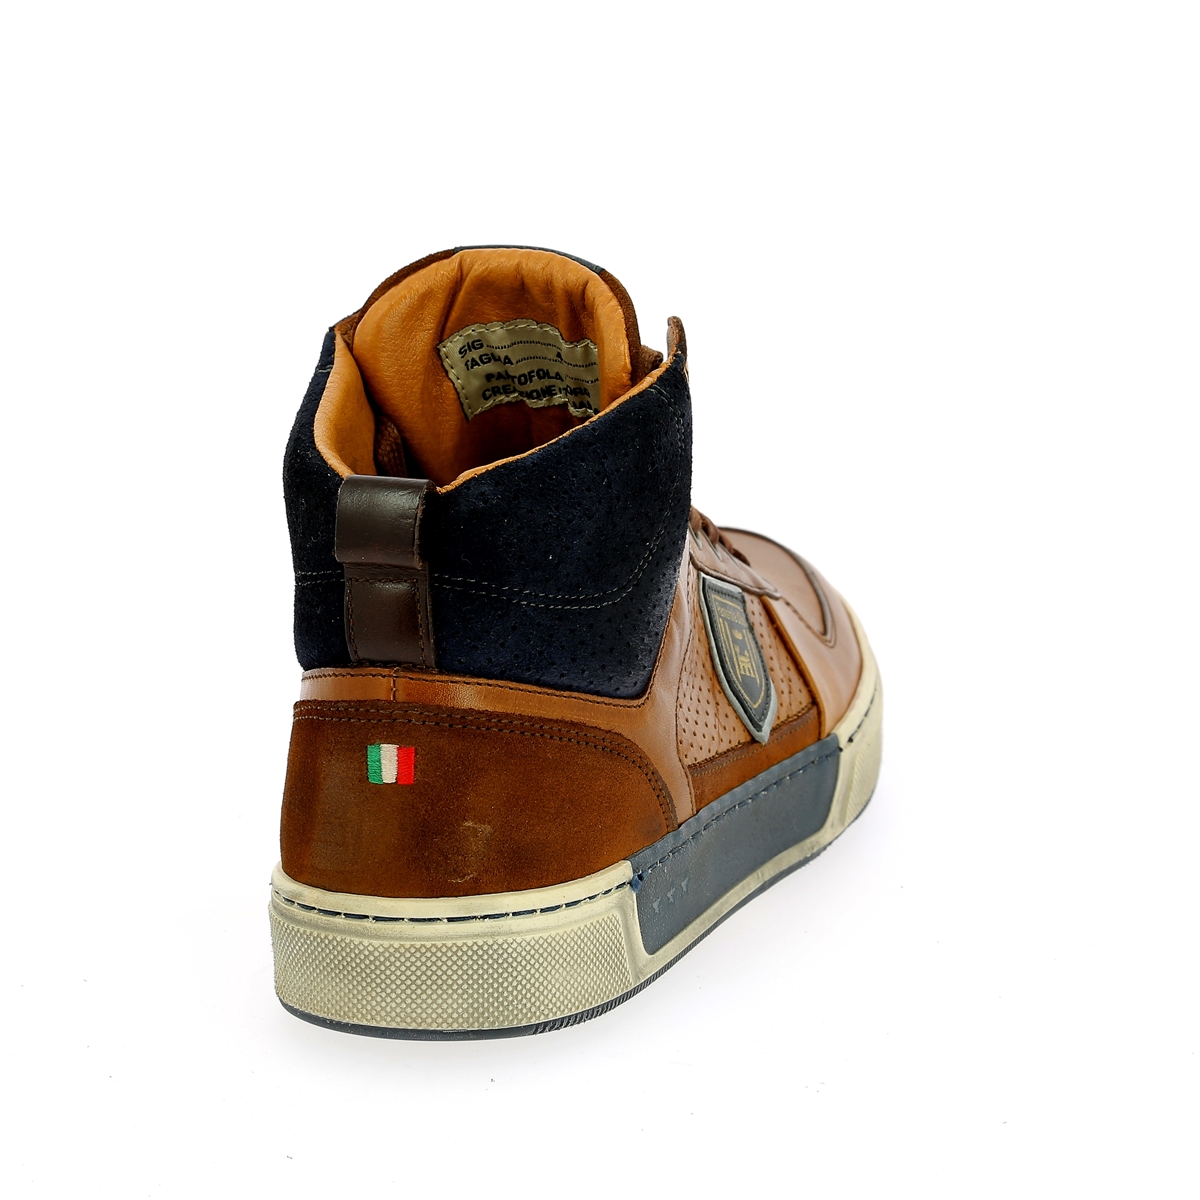 Pantofola D'oro Basket cognac